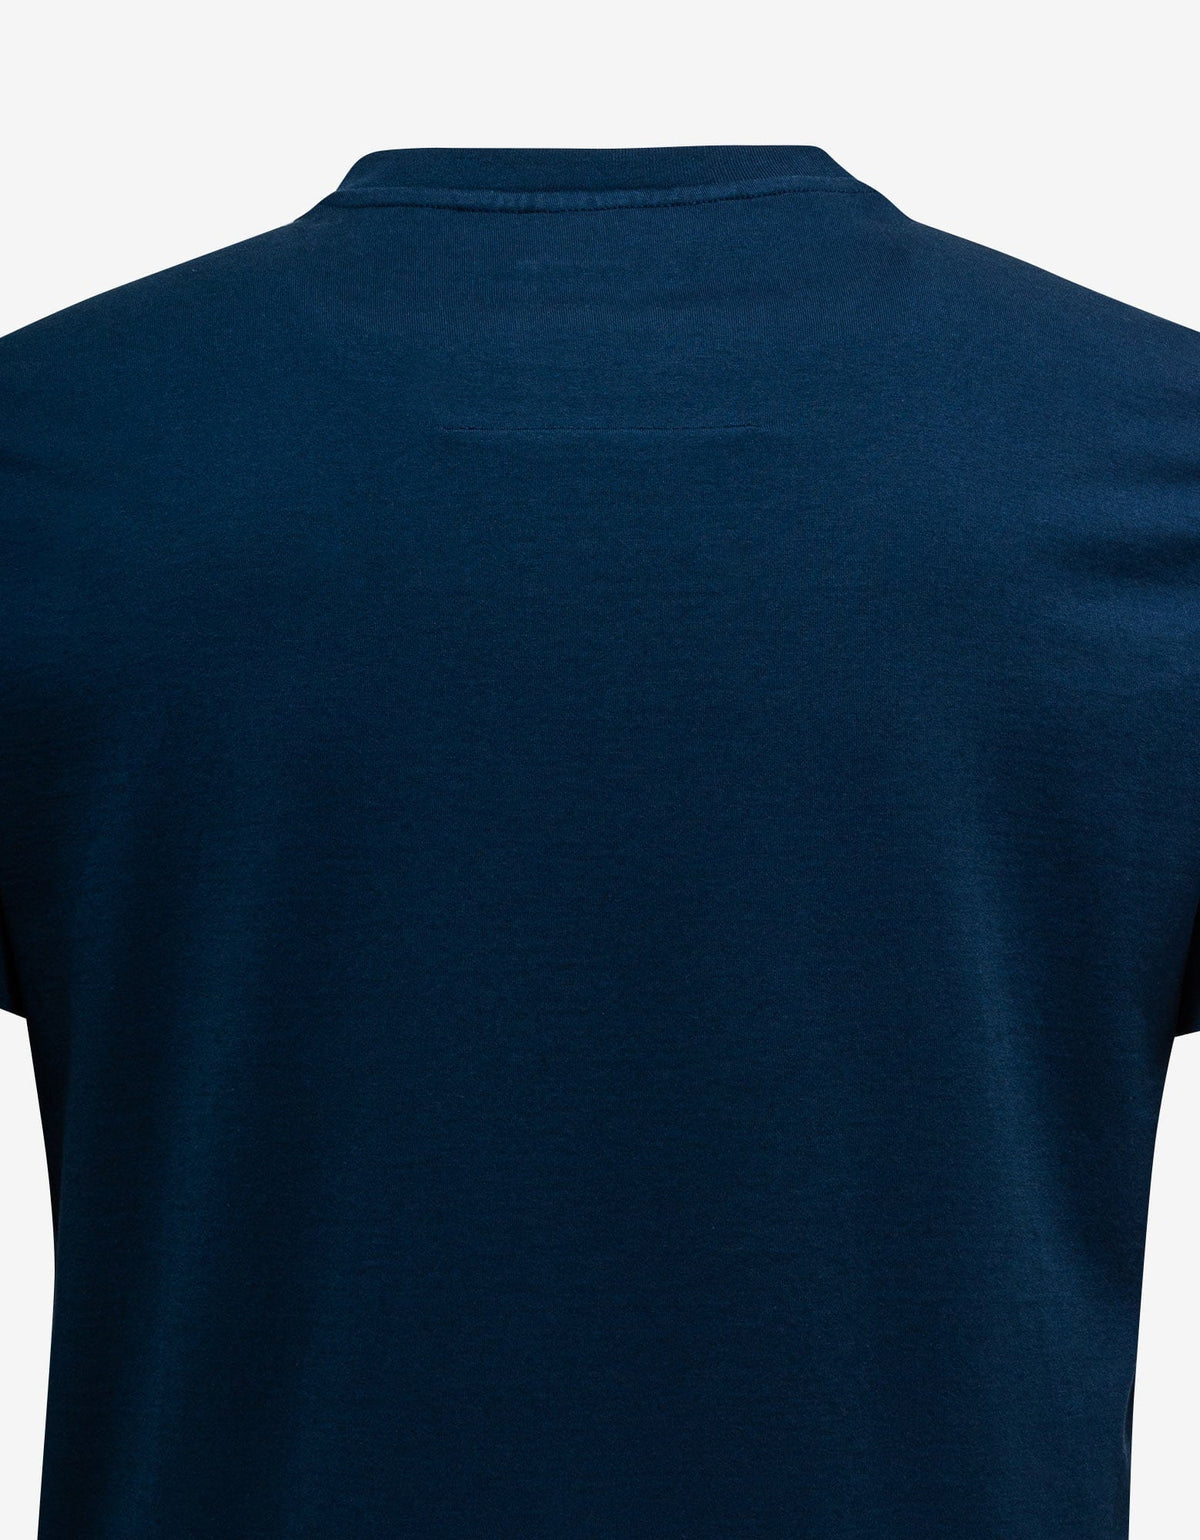 Givenchy Blue 4G Stars T-Shirt